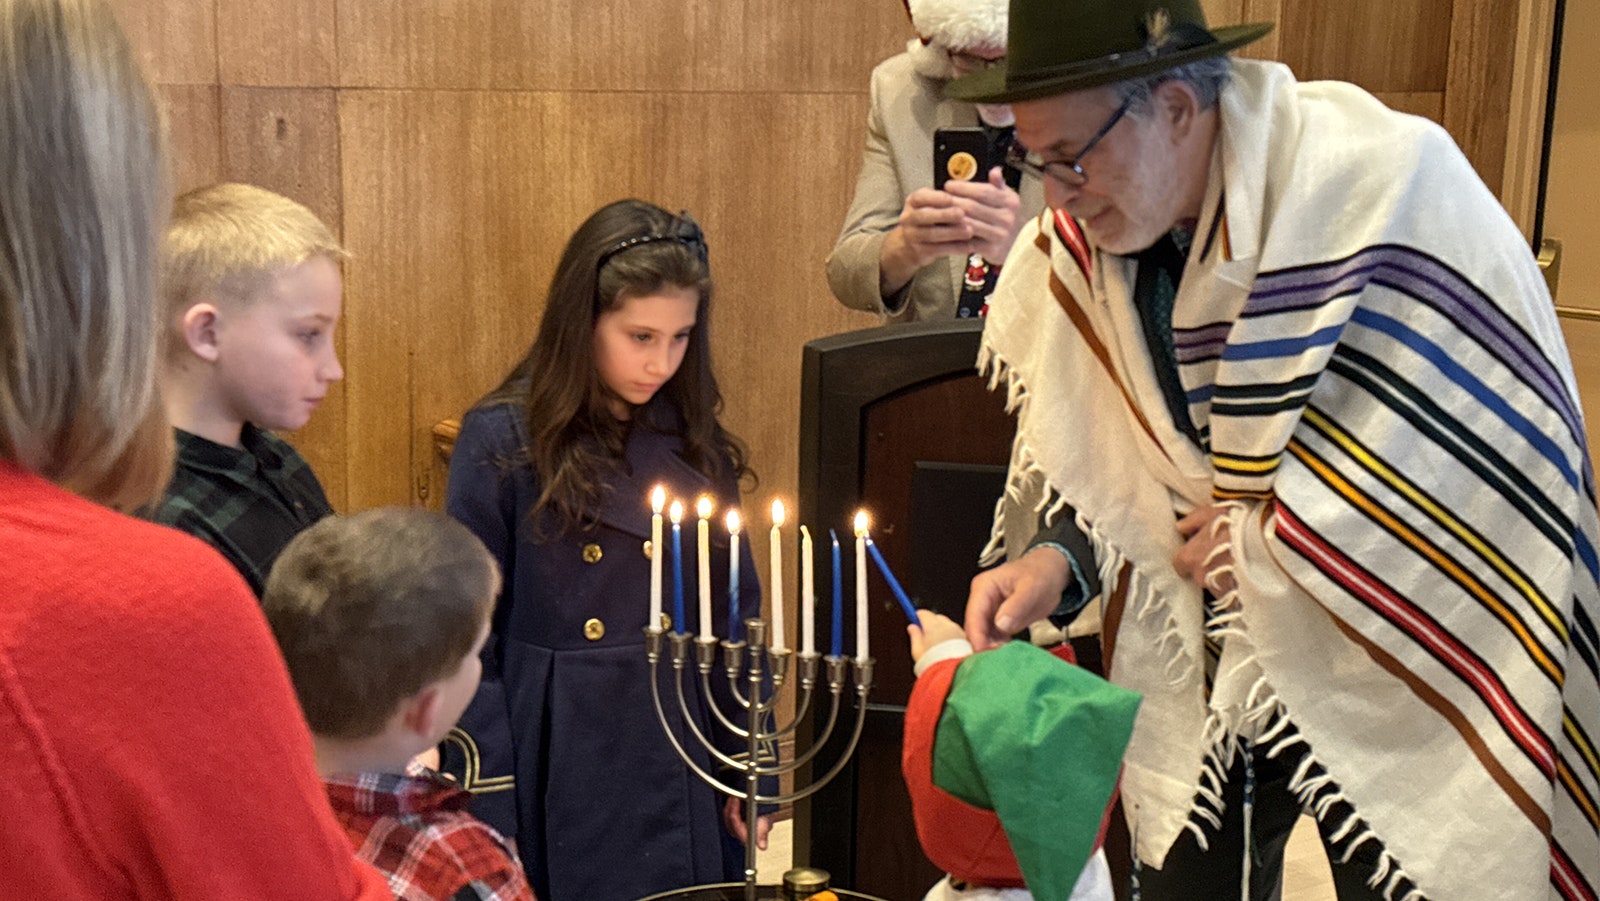 Rabbi Edward Stafman guides children lighting a Hannukah menorah during the Dec. 15 Christmas tree lighting at Mammoth Hot Springs.